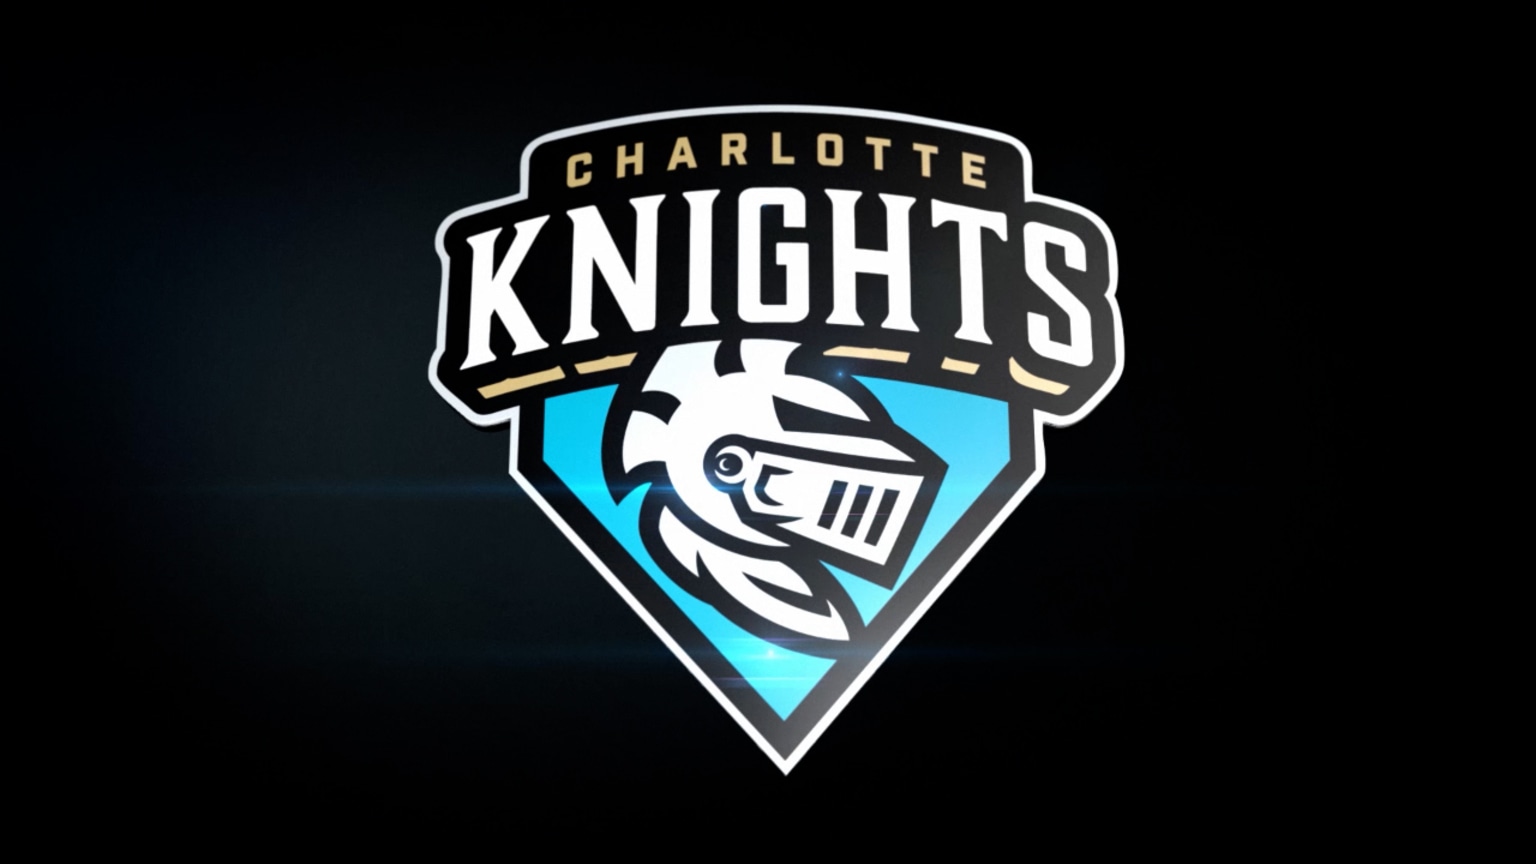 Charlotte Knights Photo - International League (IL) - Chris